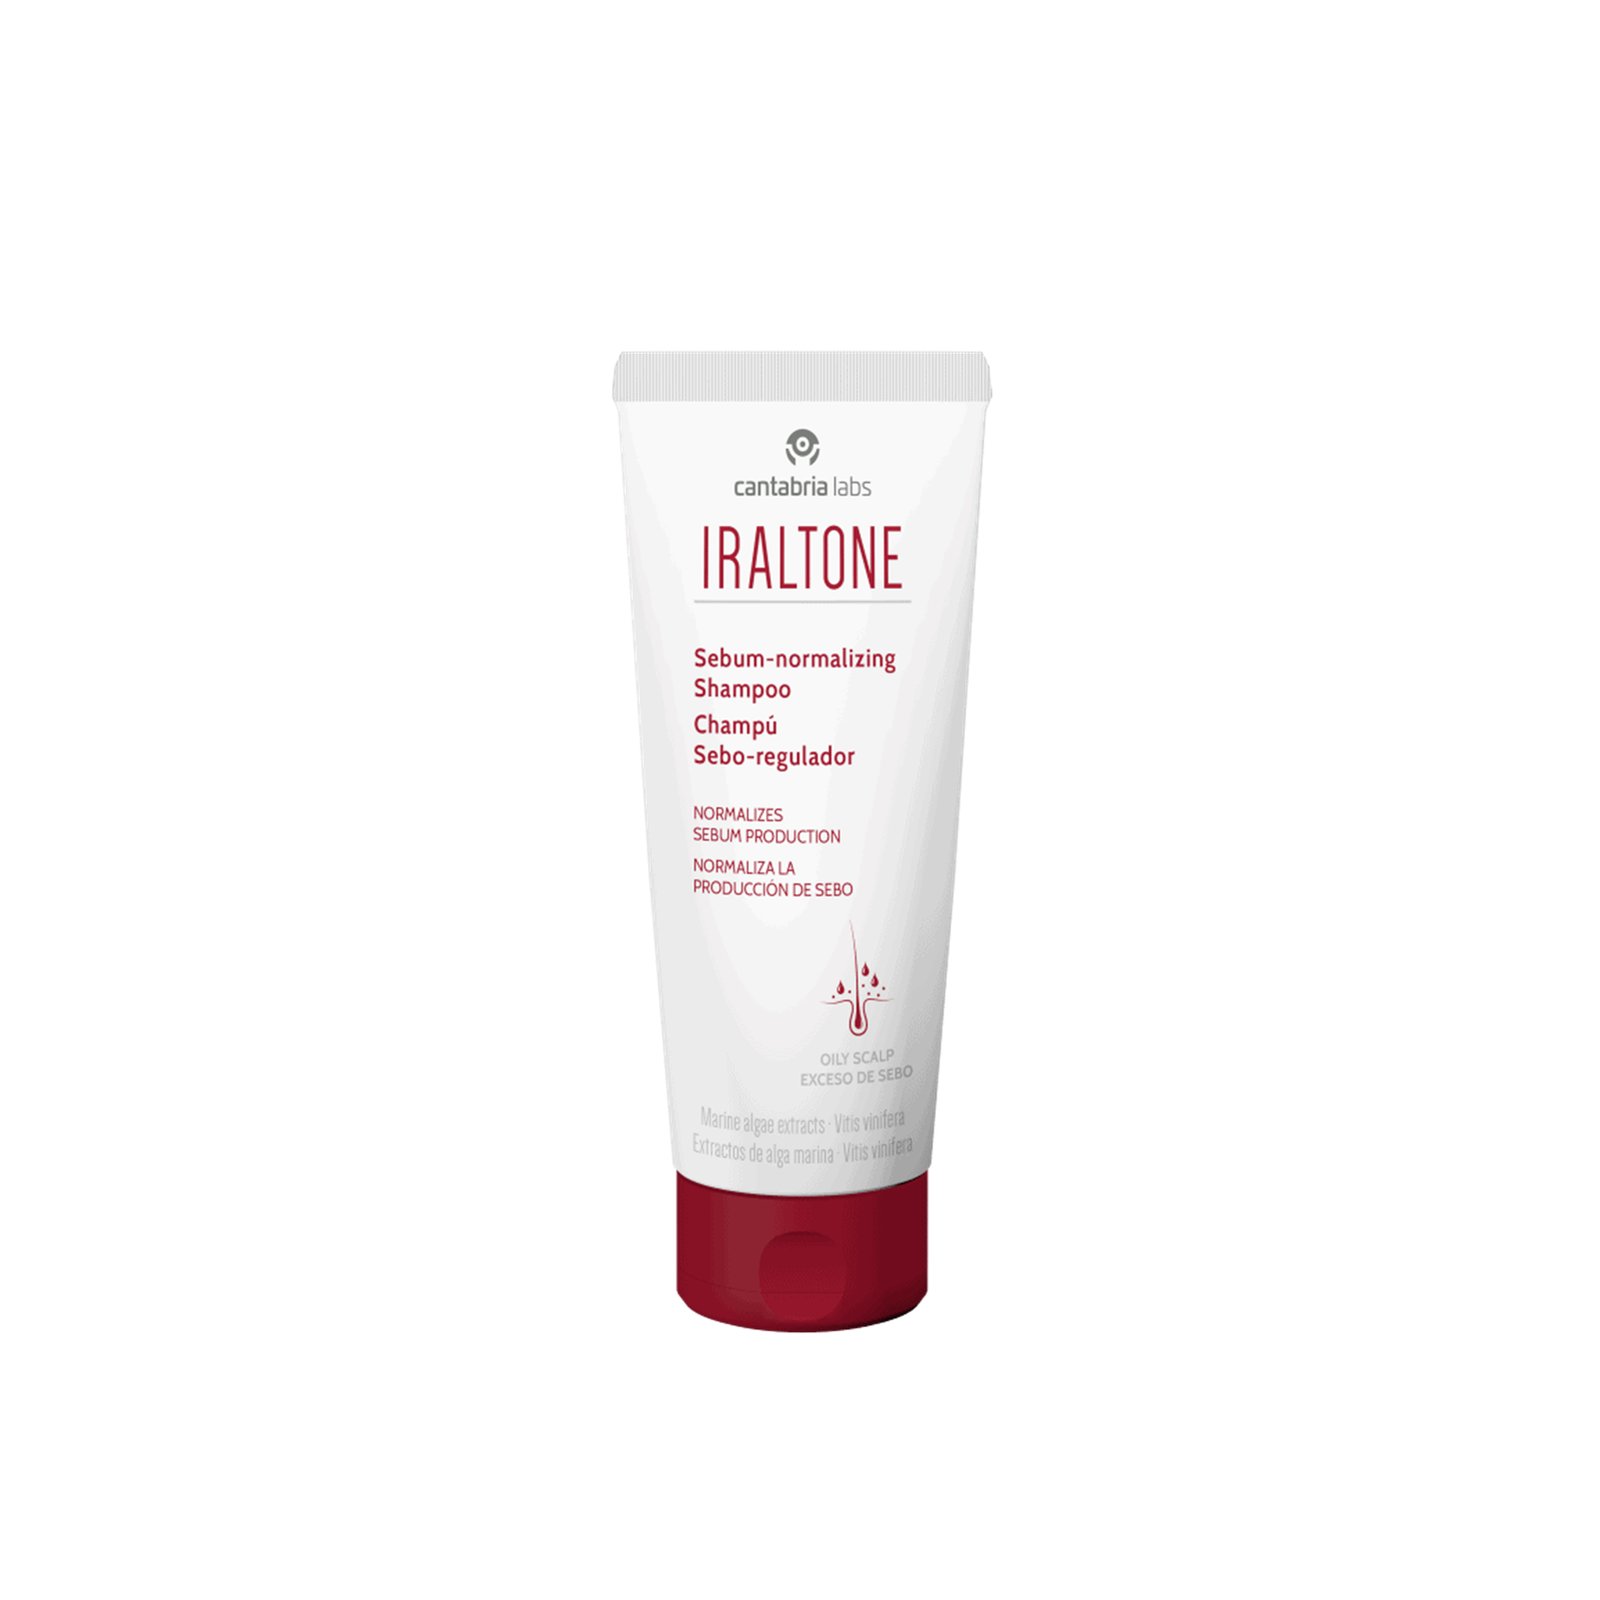 Iraltone Sebum-Normalizing Shampoo 200ml (6.76 fl oz)